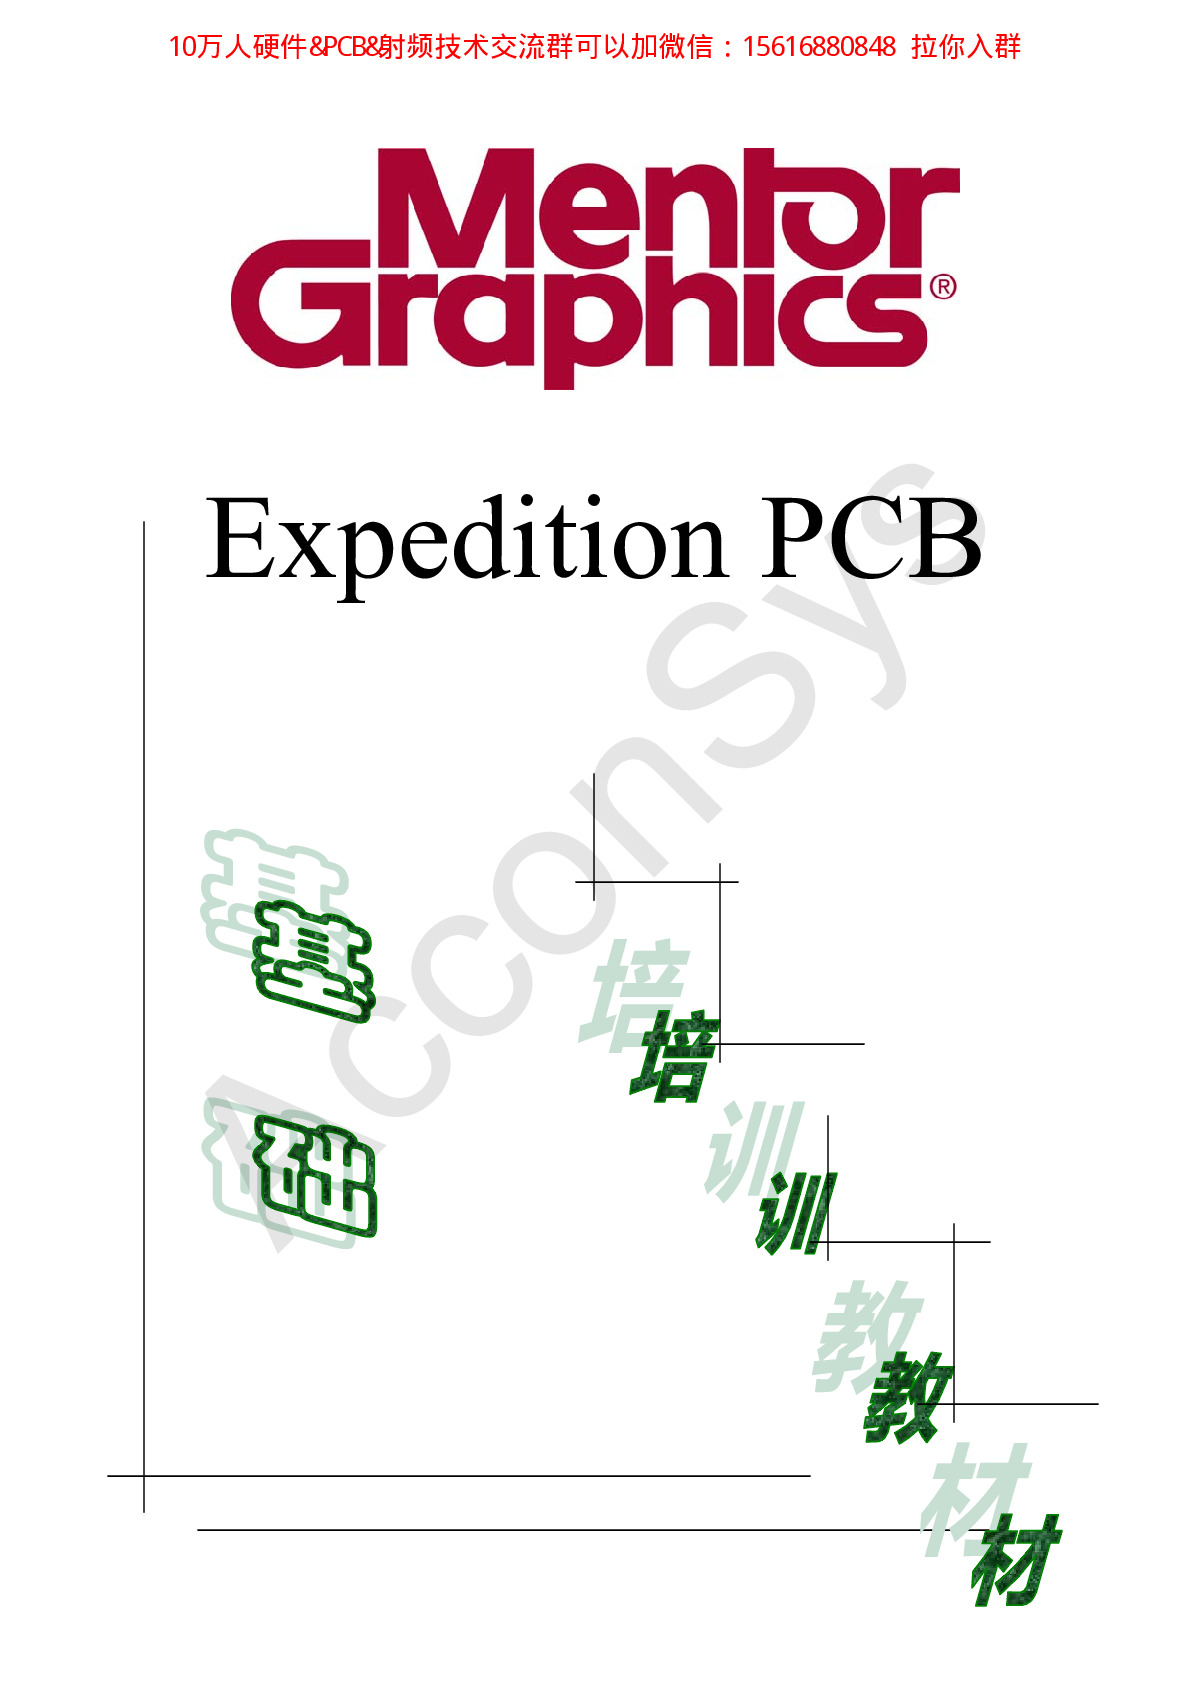 Expedition PCB基础培训教材